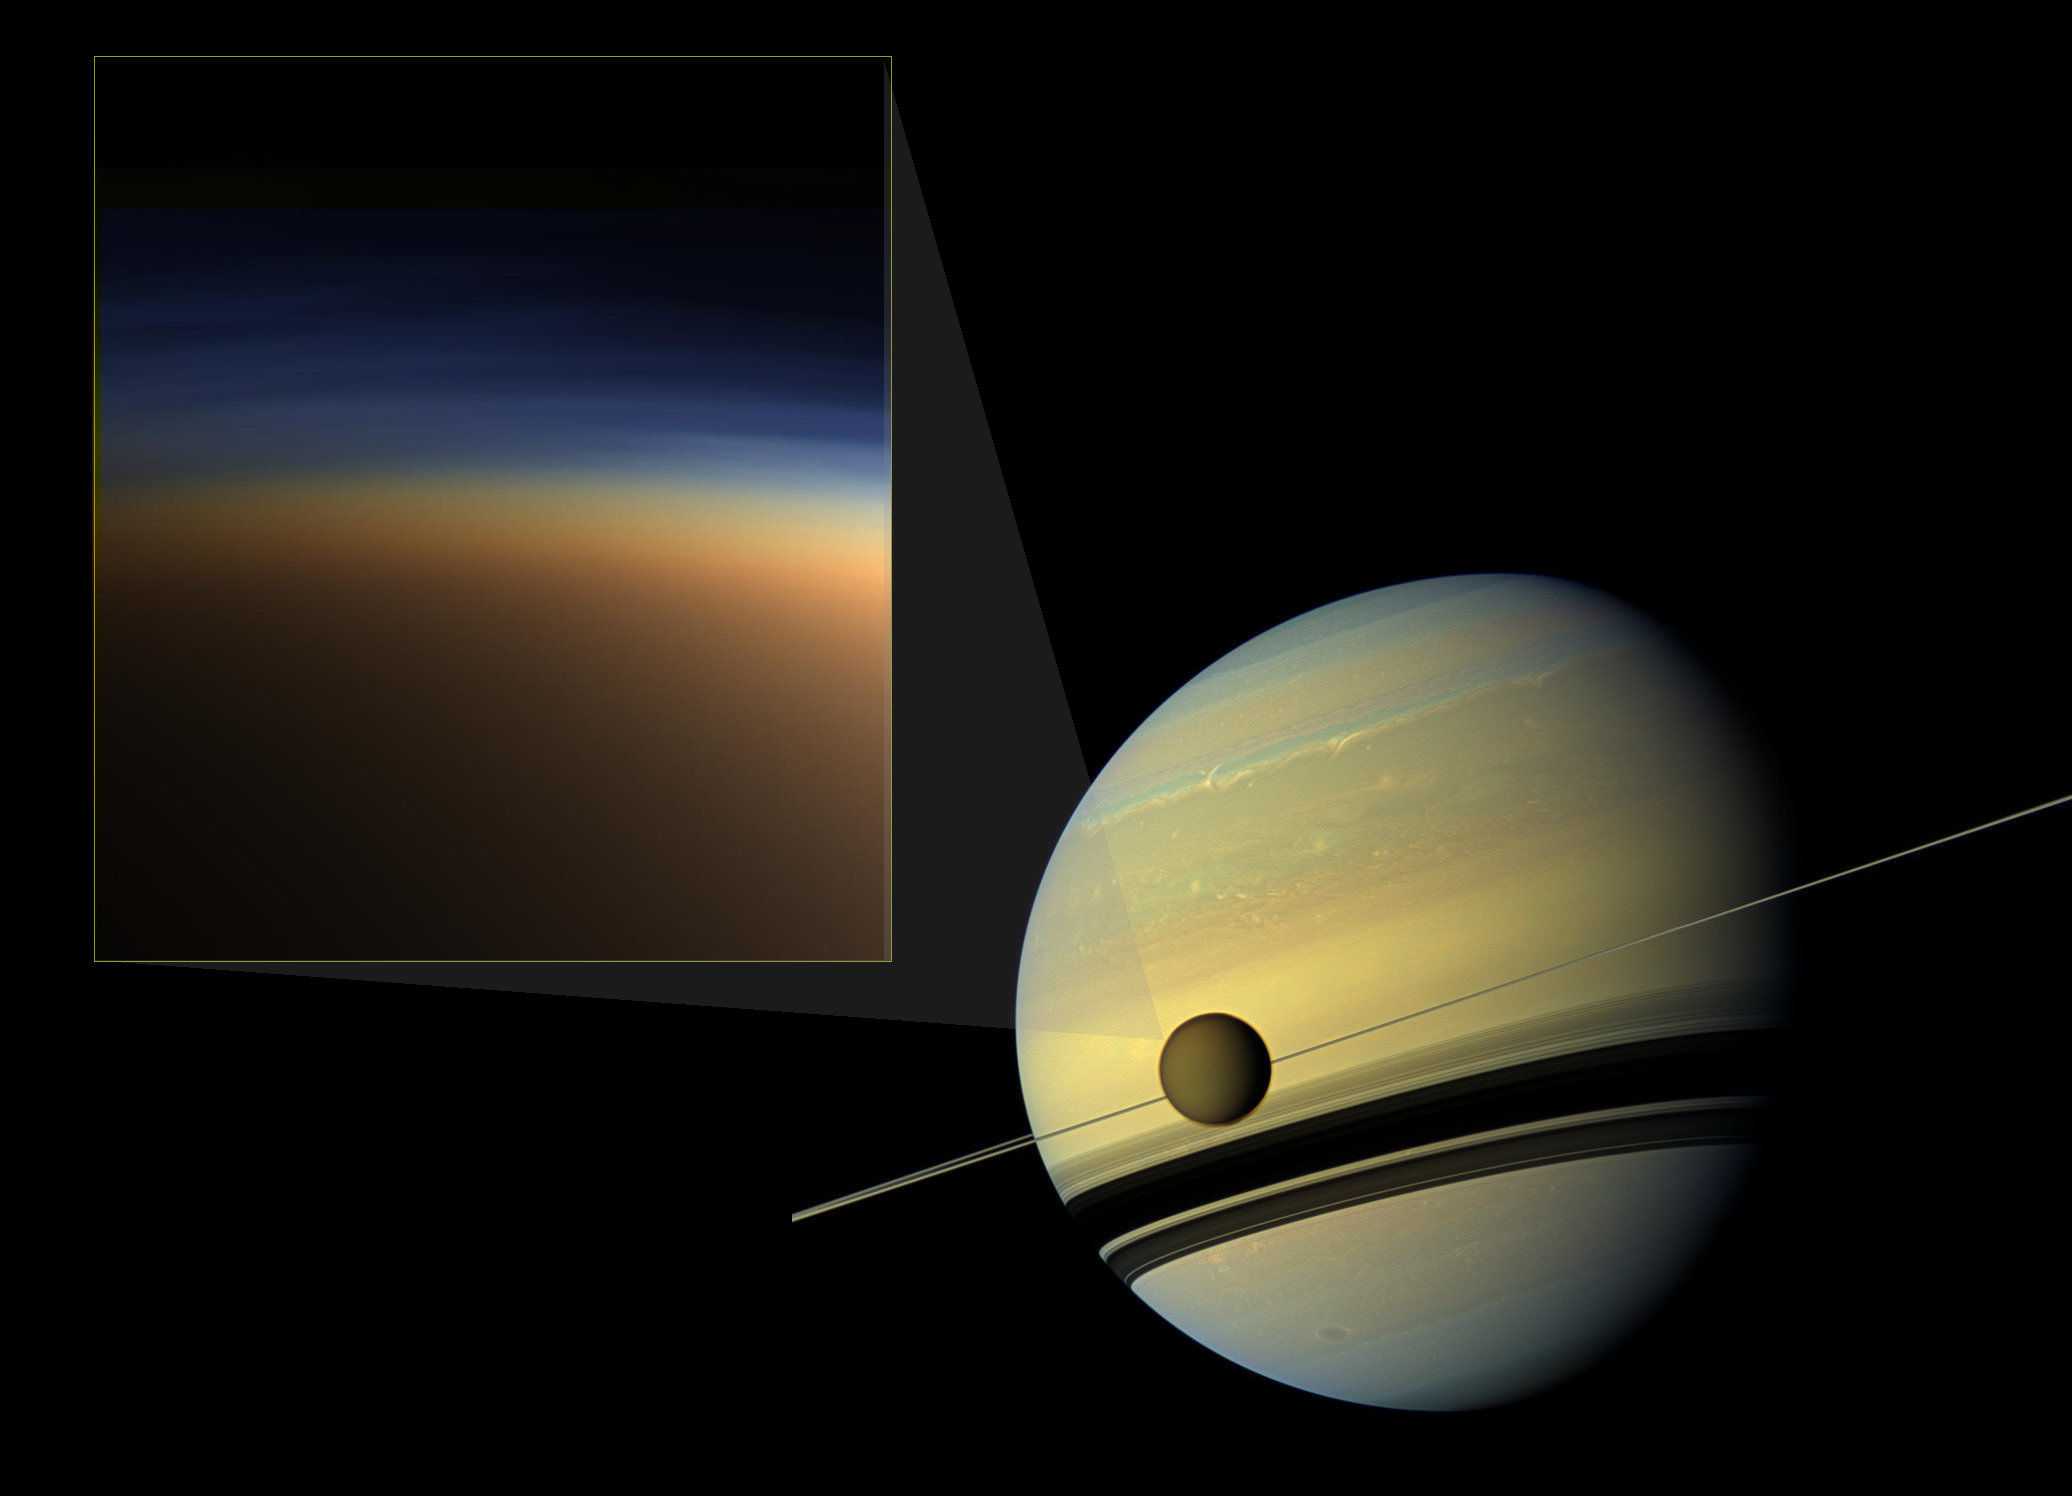 Самая большая система солнечной системы сатурн. Титан Спутник Сатурна. Титан Луна Сатурна. Титан Спутник спутники Сатурна. Самый большой Спутник Сатурна — Титан.